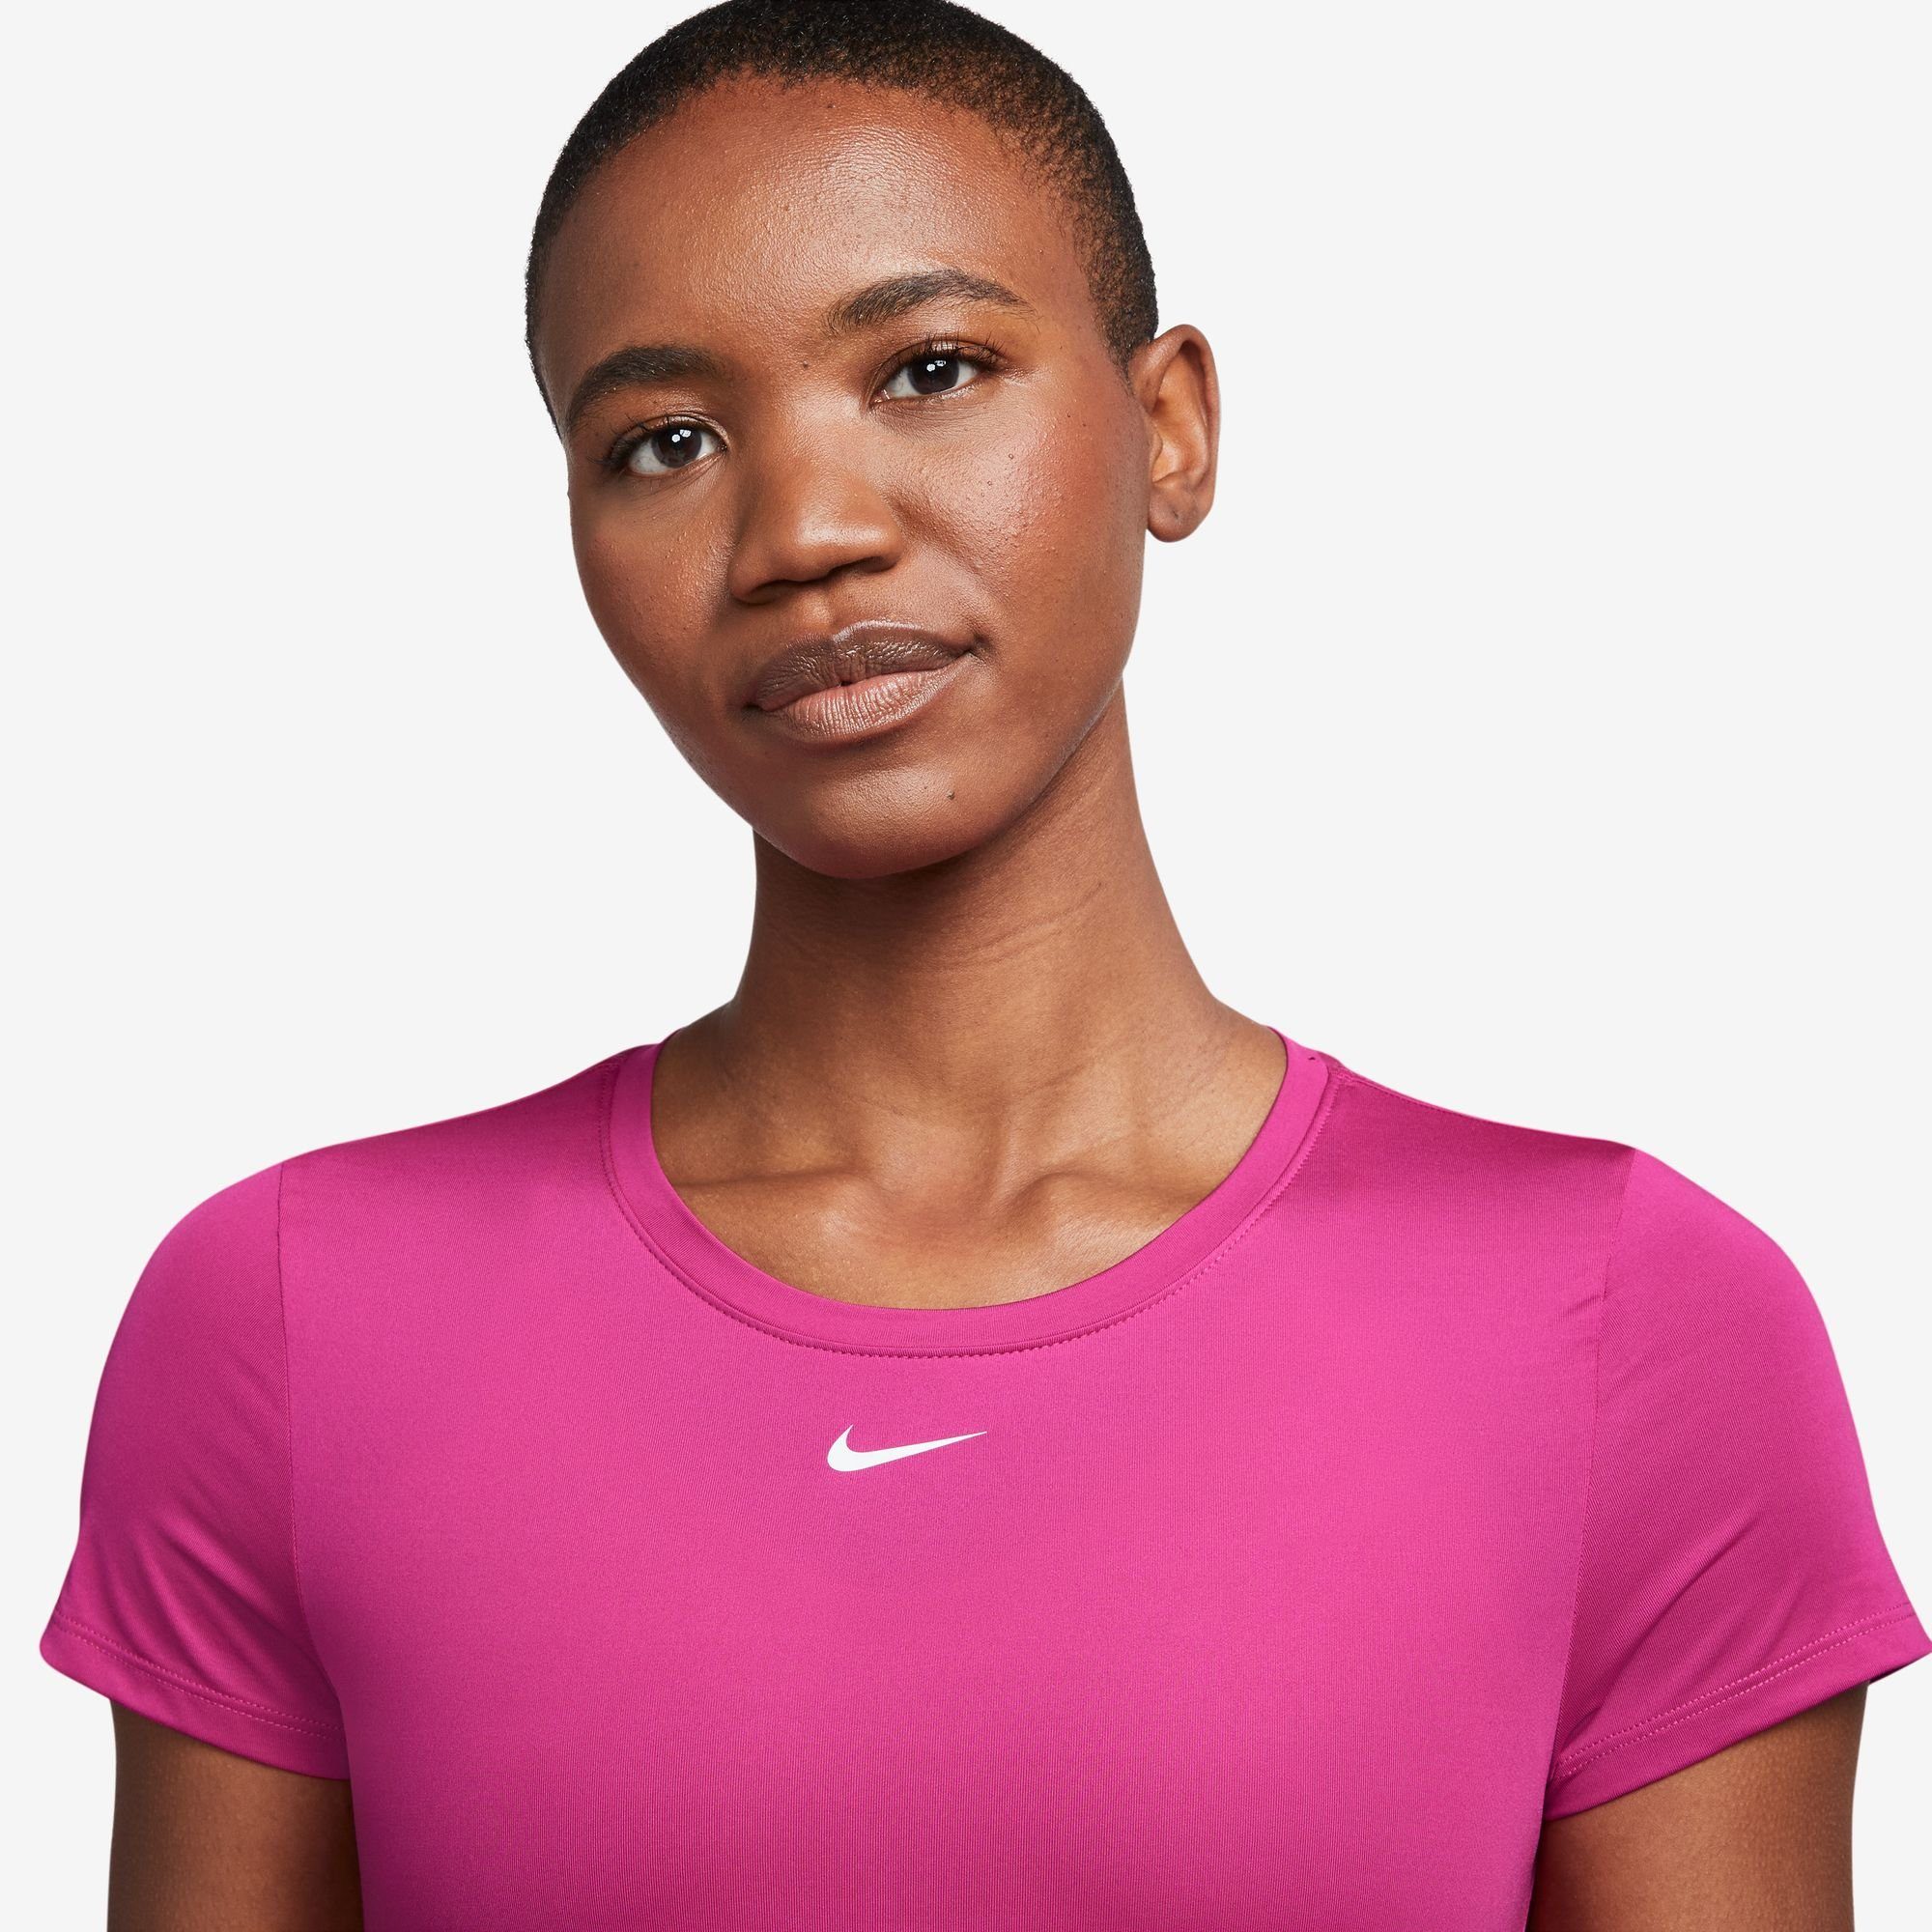 FIREBERRY/WHITE SLIM Nike FIT WOMEN'S DRI-FIT Trainingsshirt SHORT-SLEEVE ONE TOP